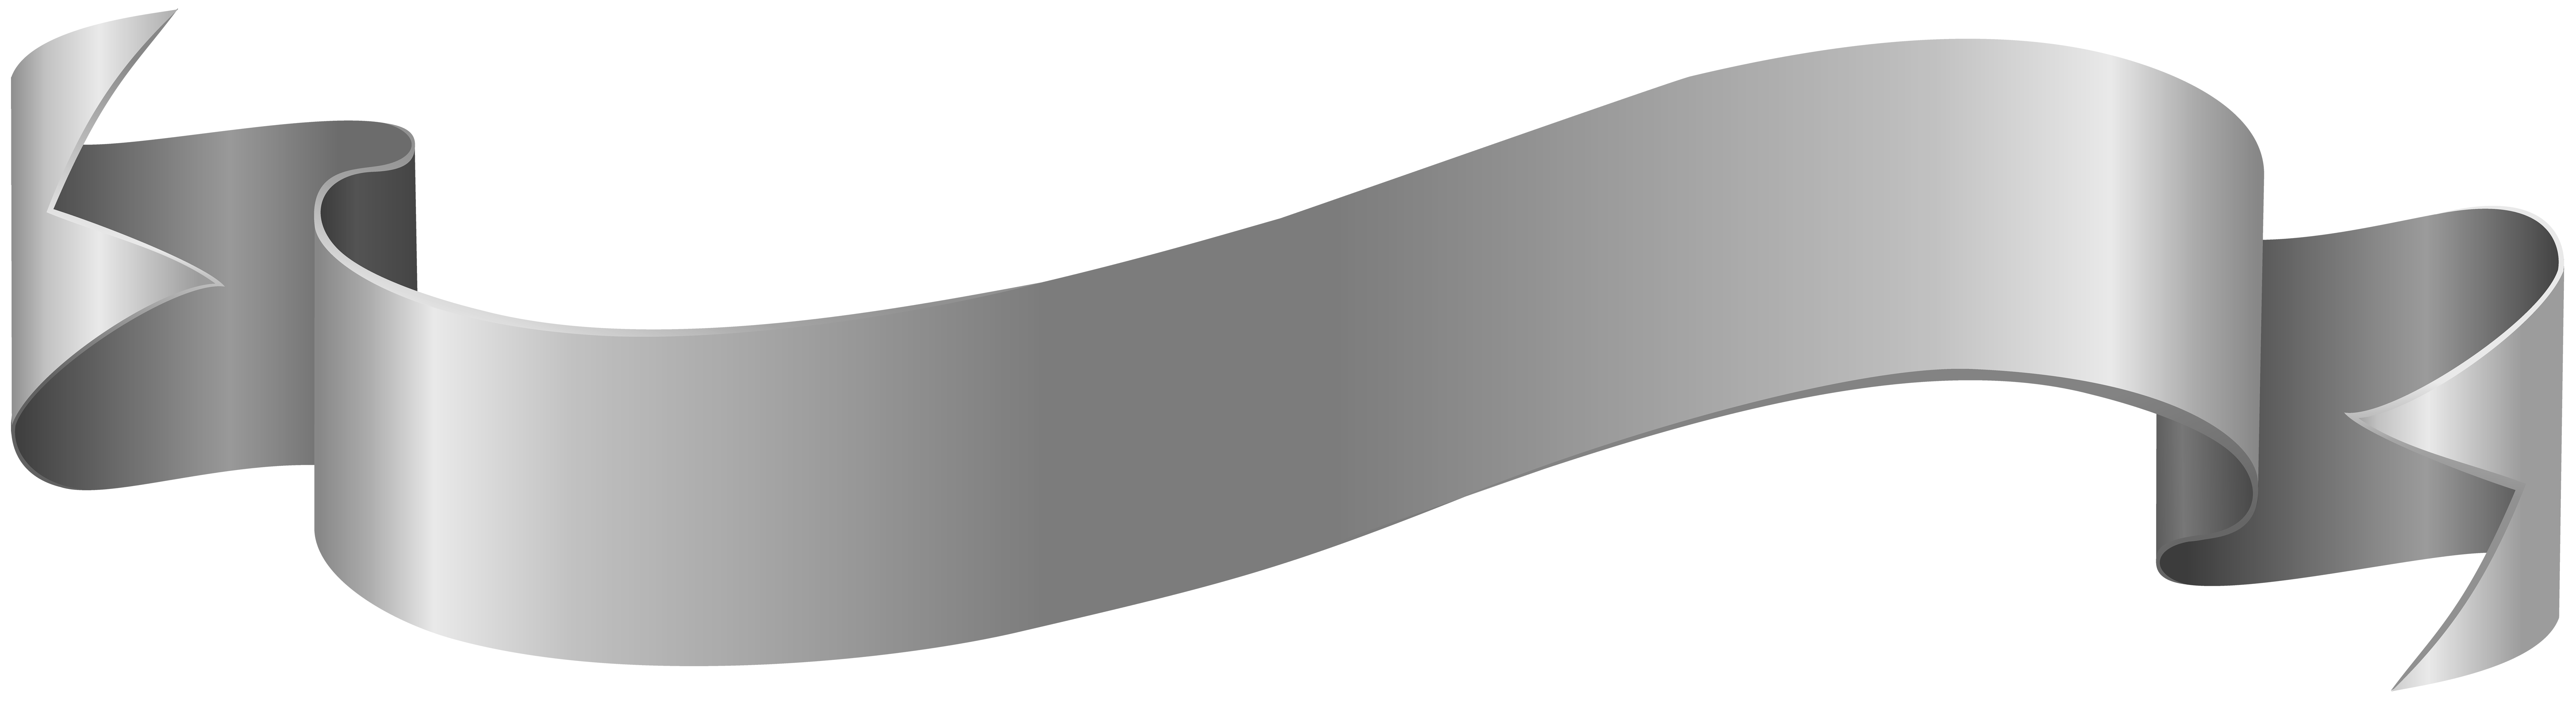 clipart banner gray